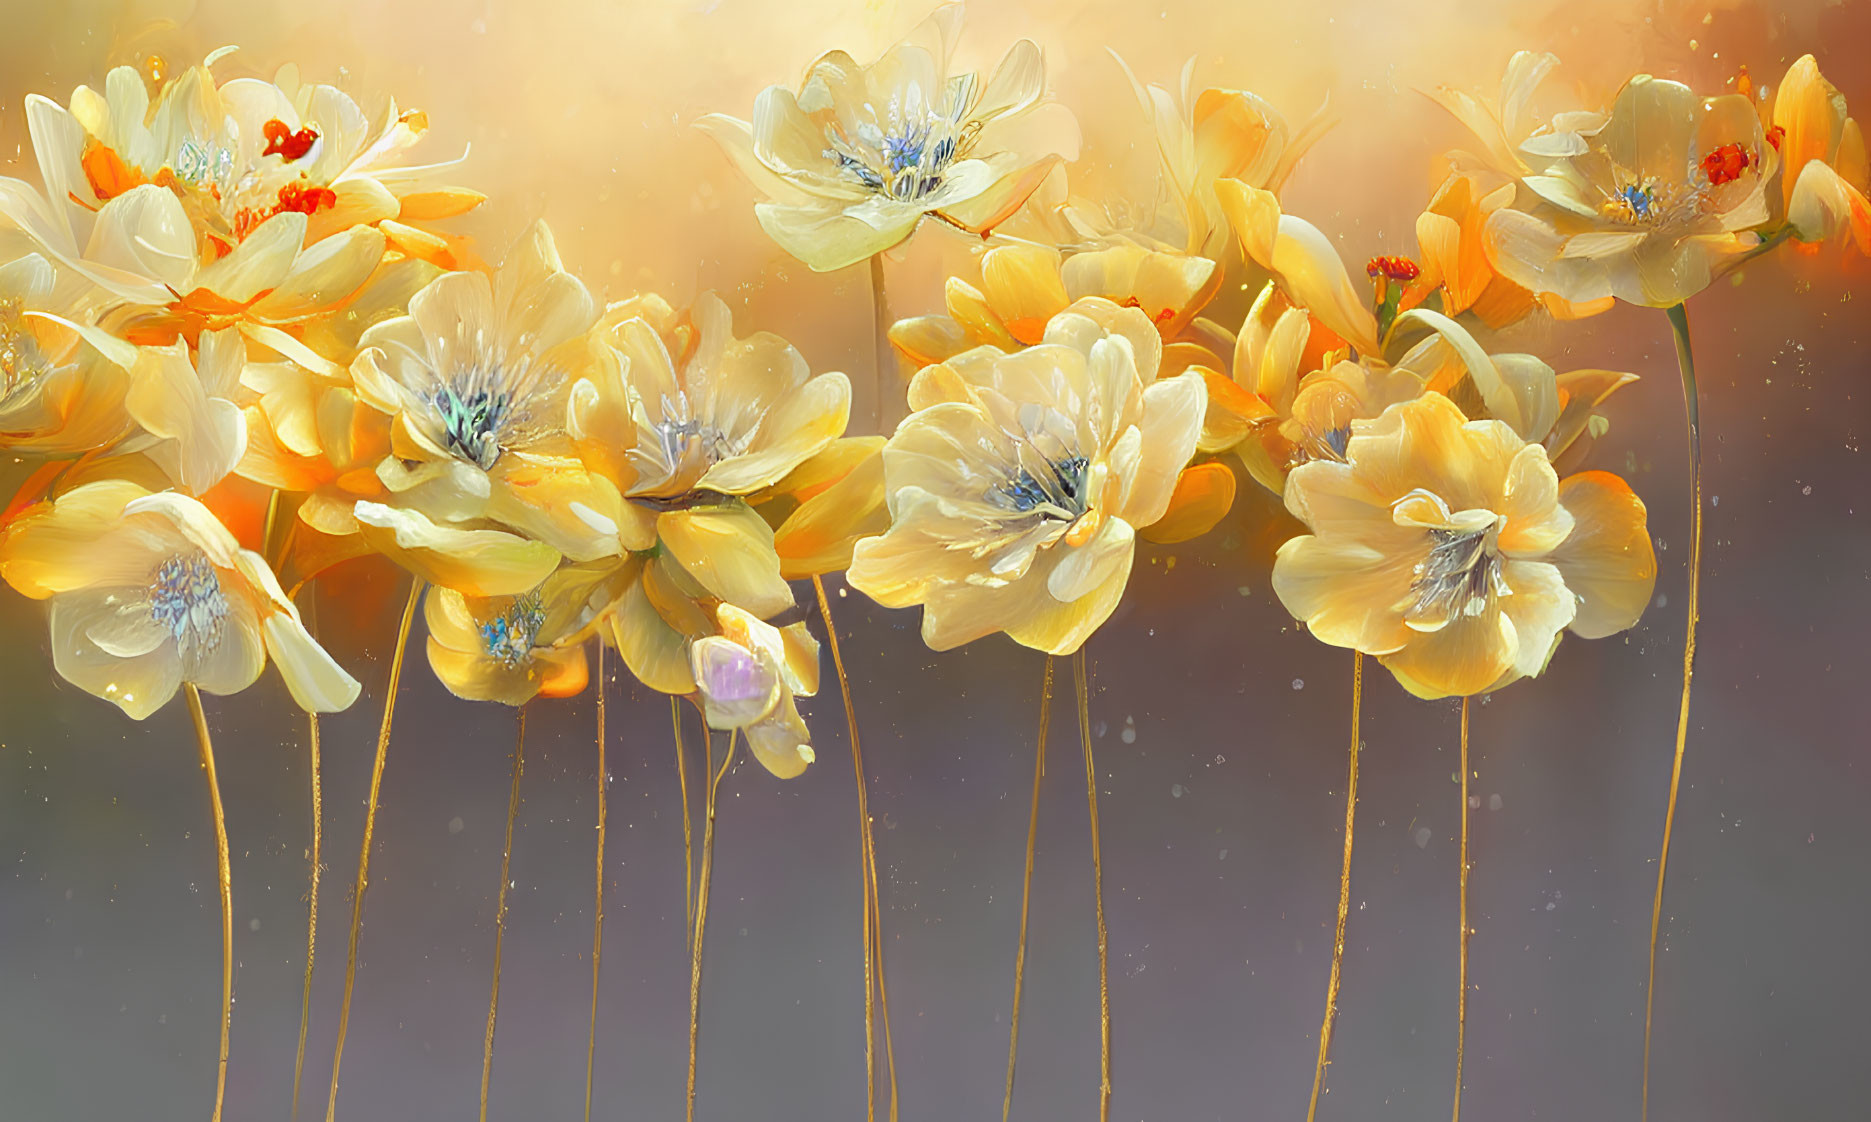 Detailed digital artwork of vibrant yellow-orange flowers on soft-focus background